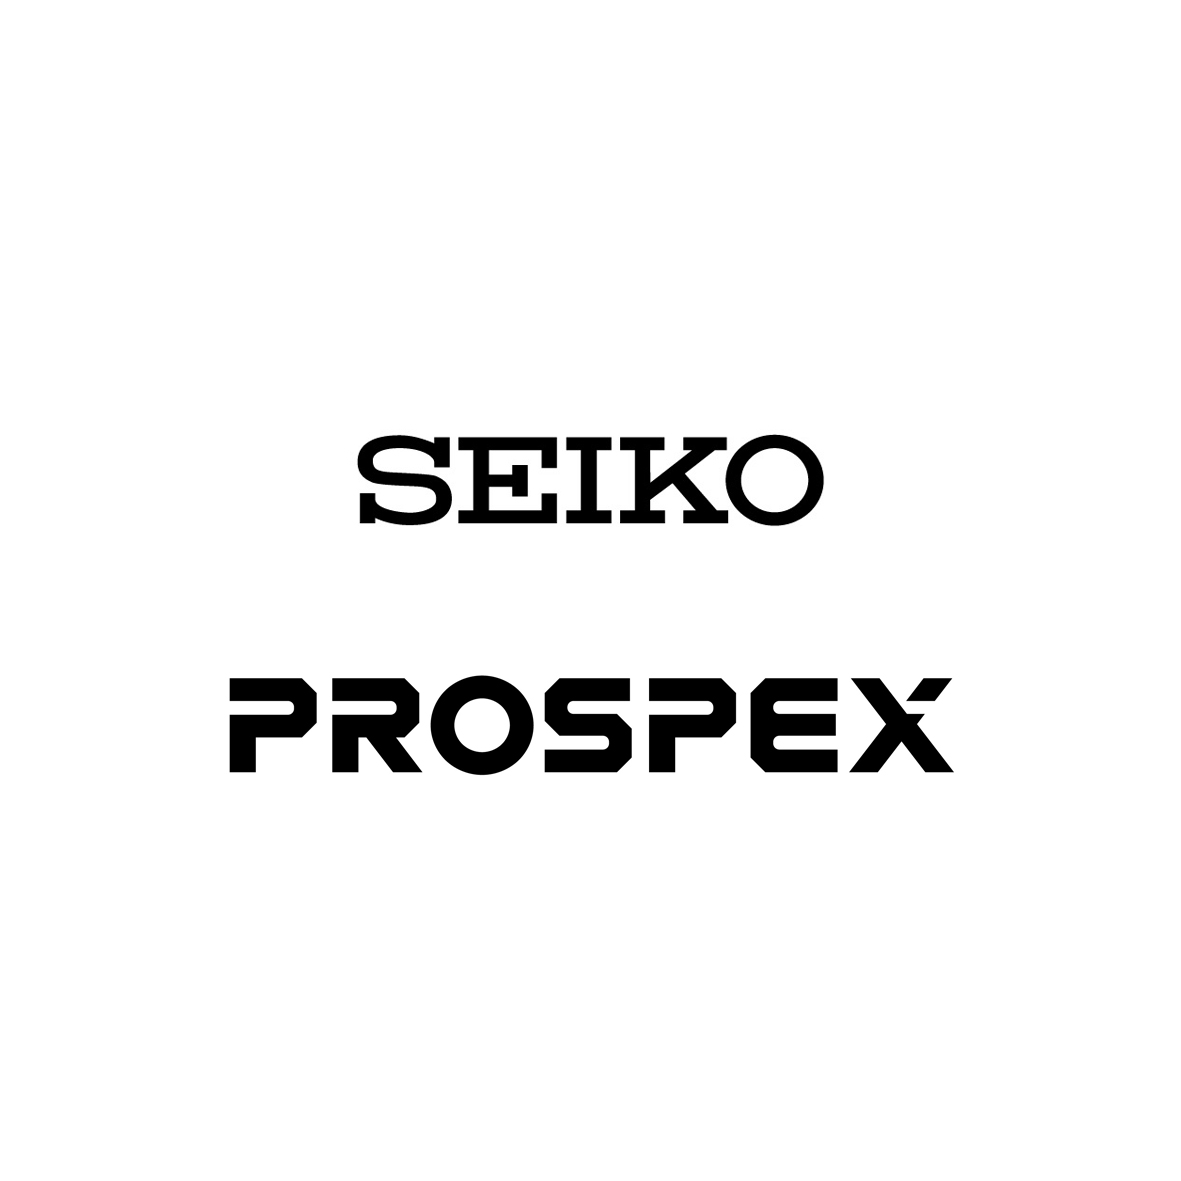 PROSPEX(プロスペックス)